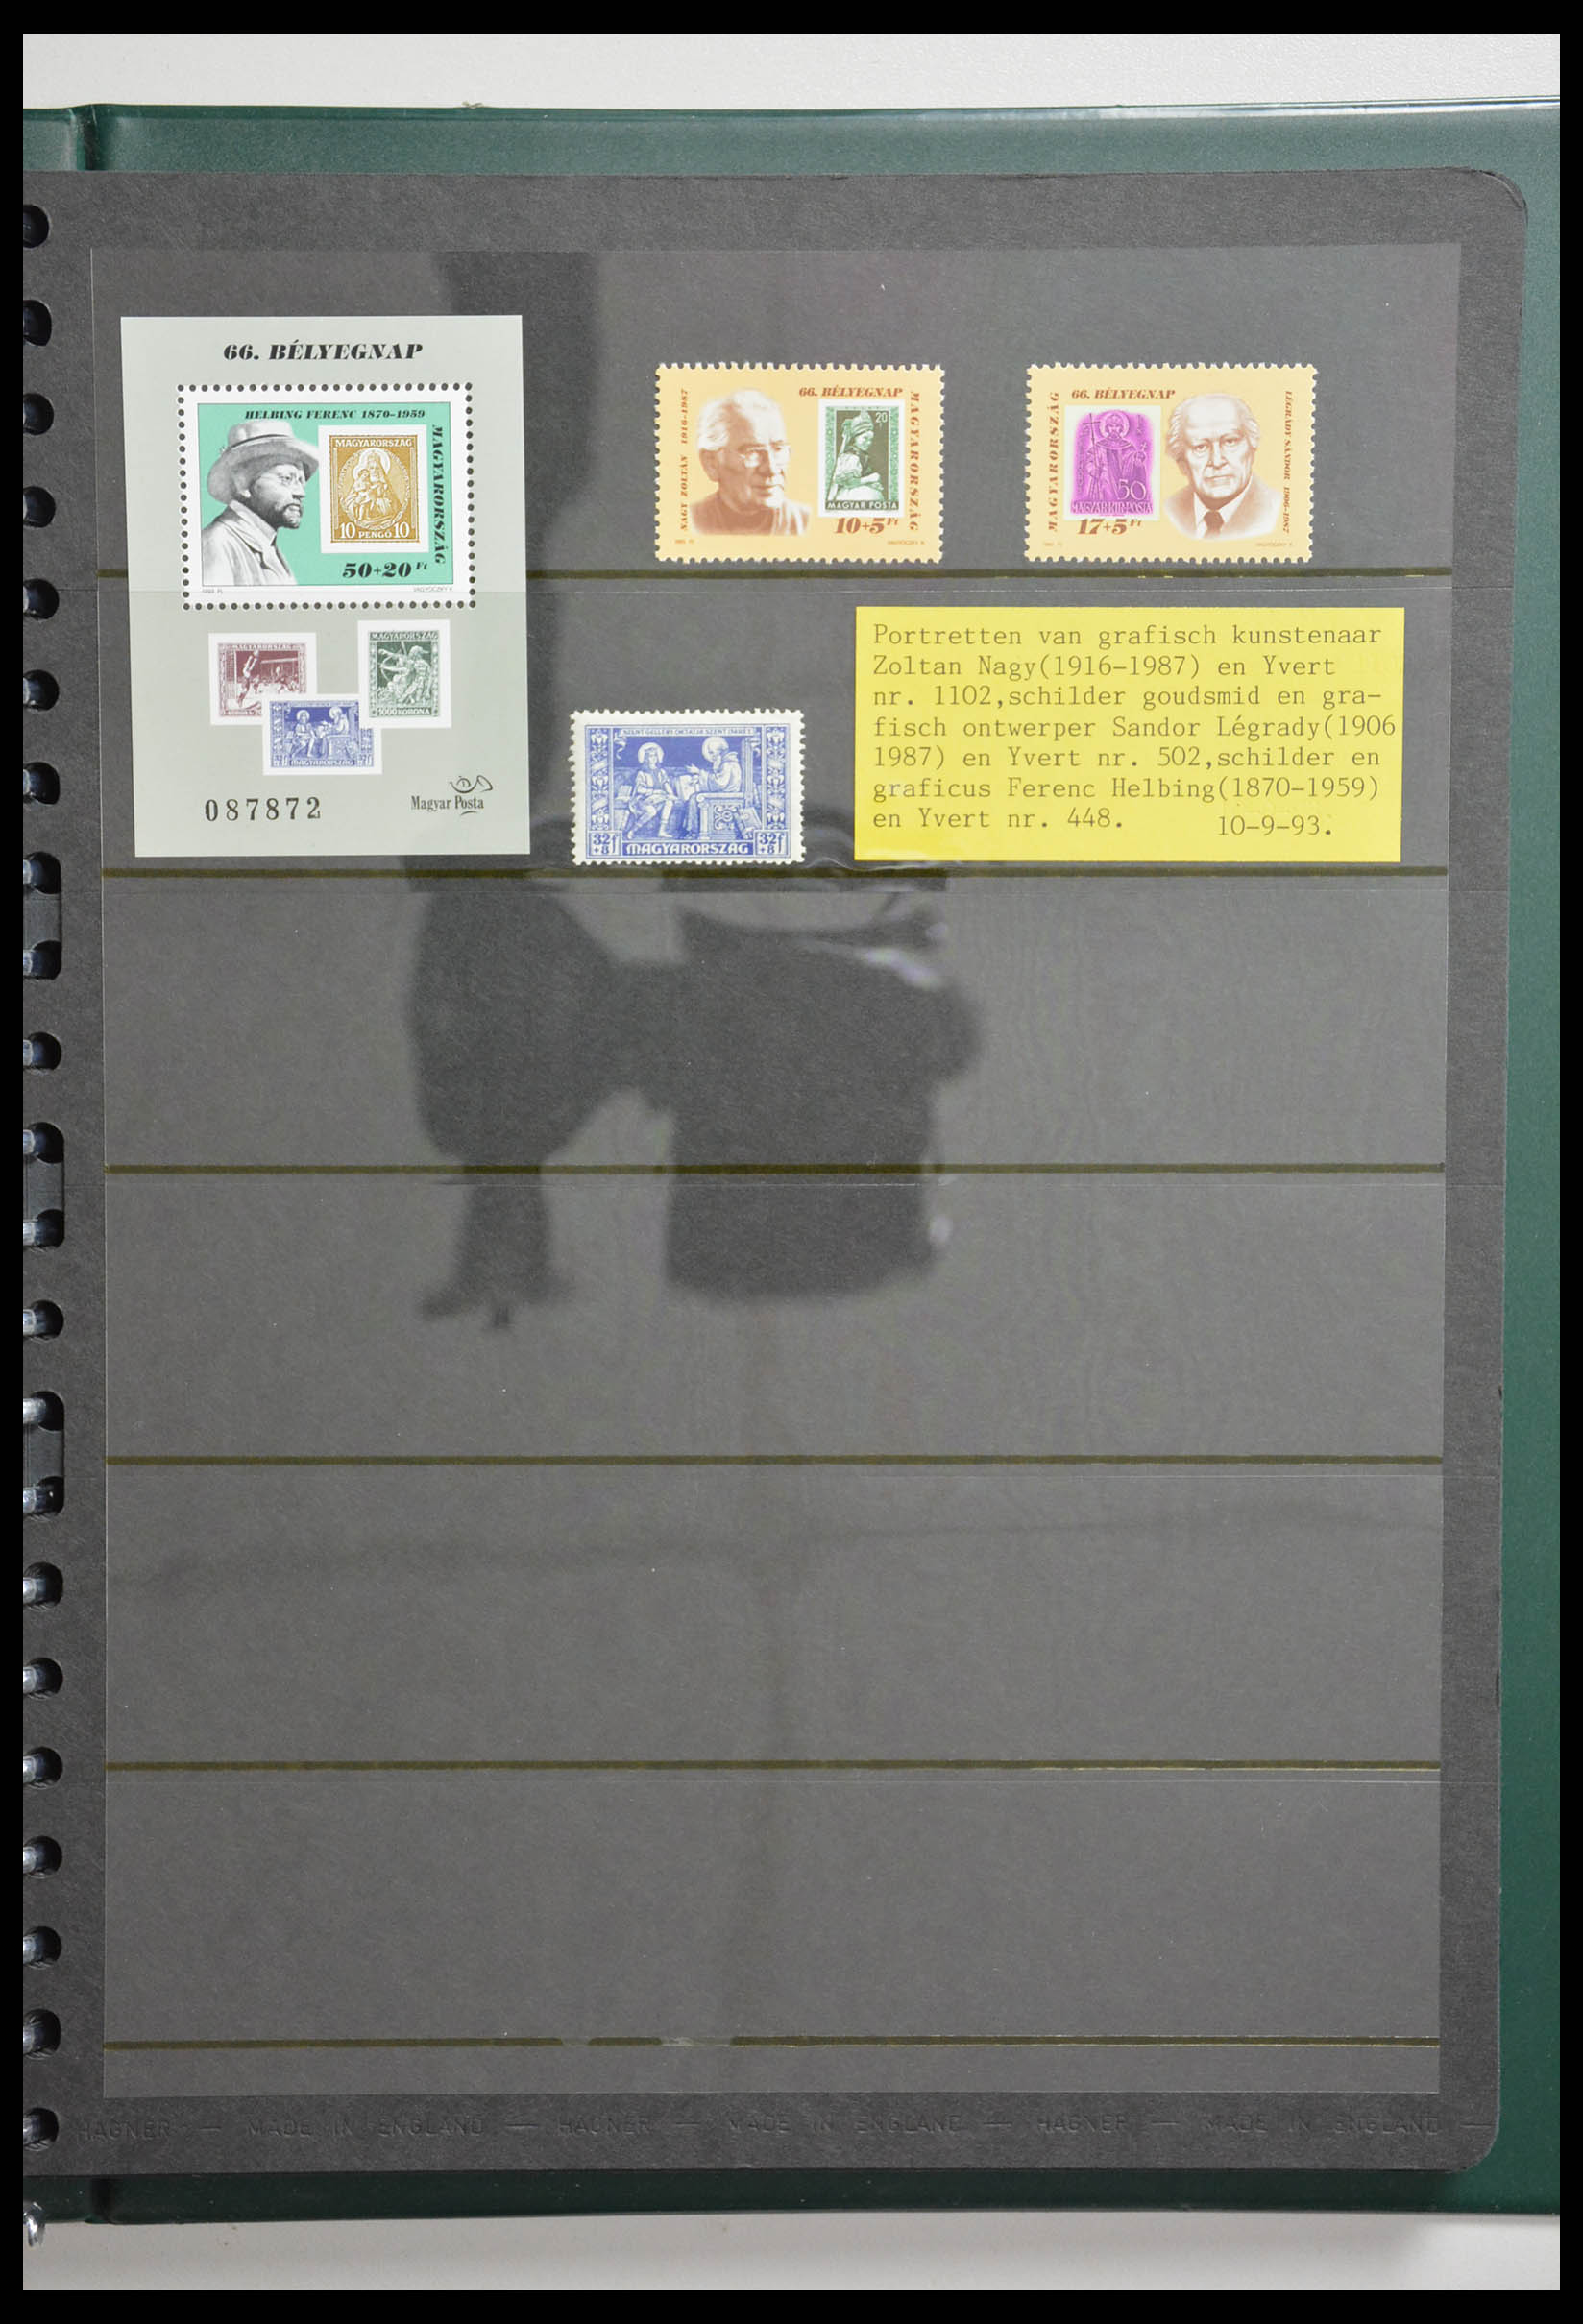 28337 106 - 28337 Postzegel op postzegel 1840-2001.